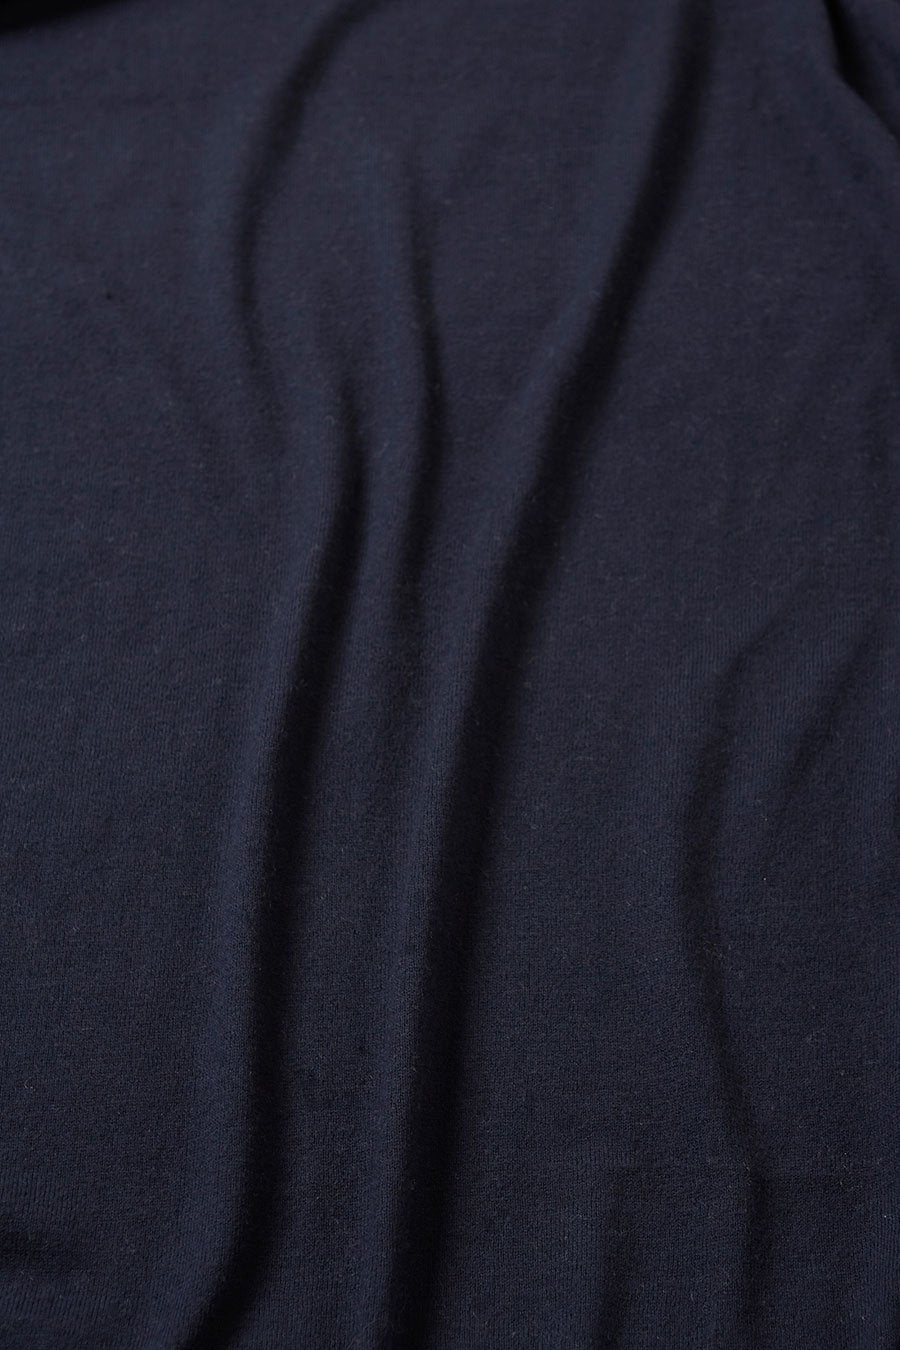 Ngali Navy Cotton/Cashmere Wrap